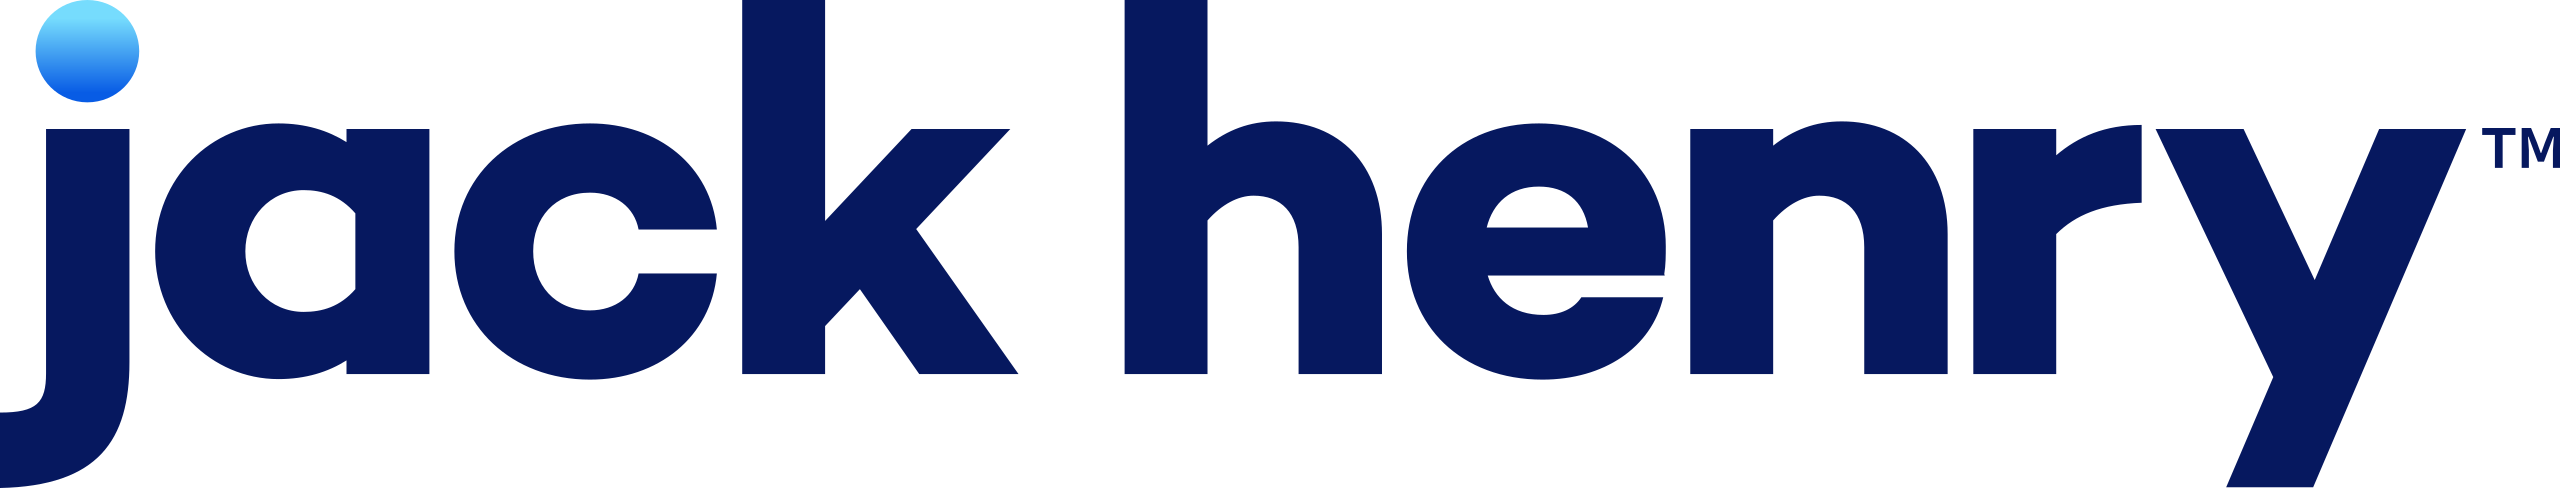 Jack Henry logo.